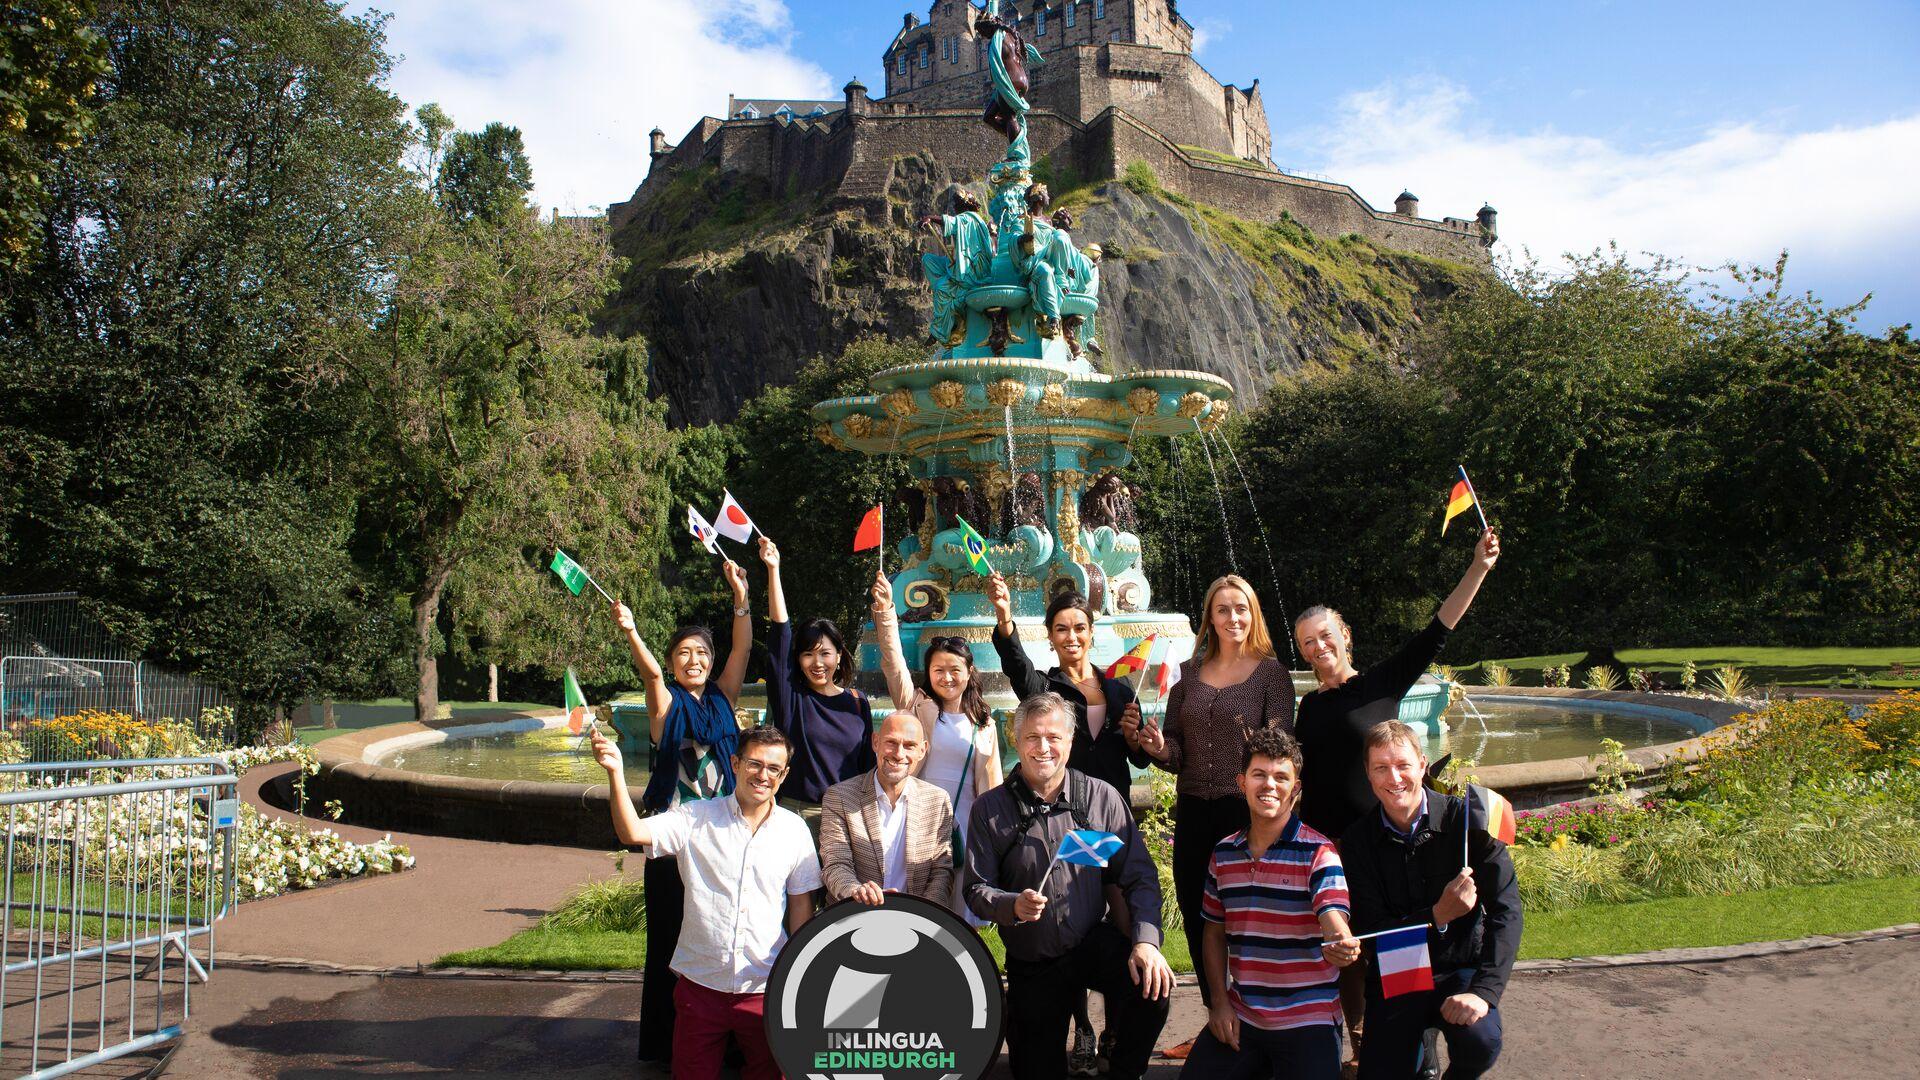 Sprachaufenthalt England, Edinburgh - Inlingua Edinburgh, Studenten